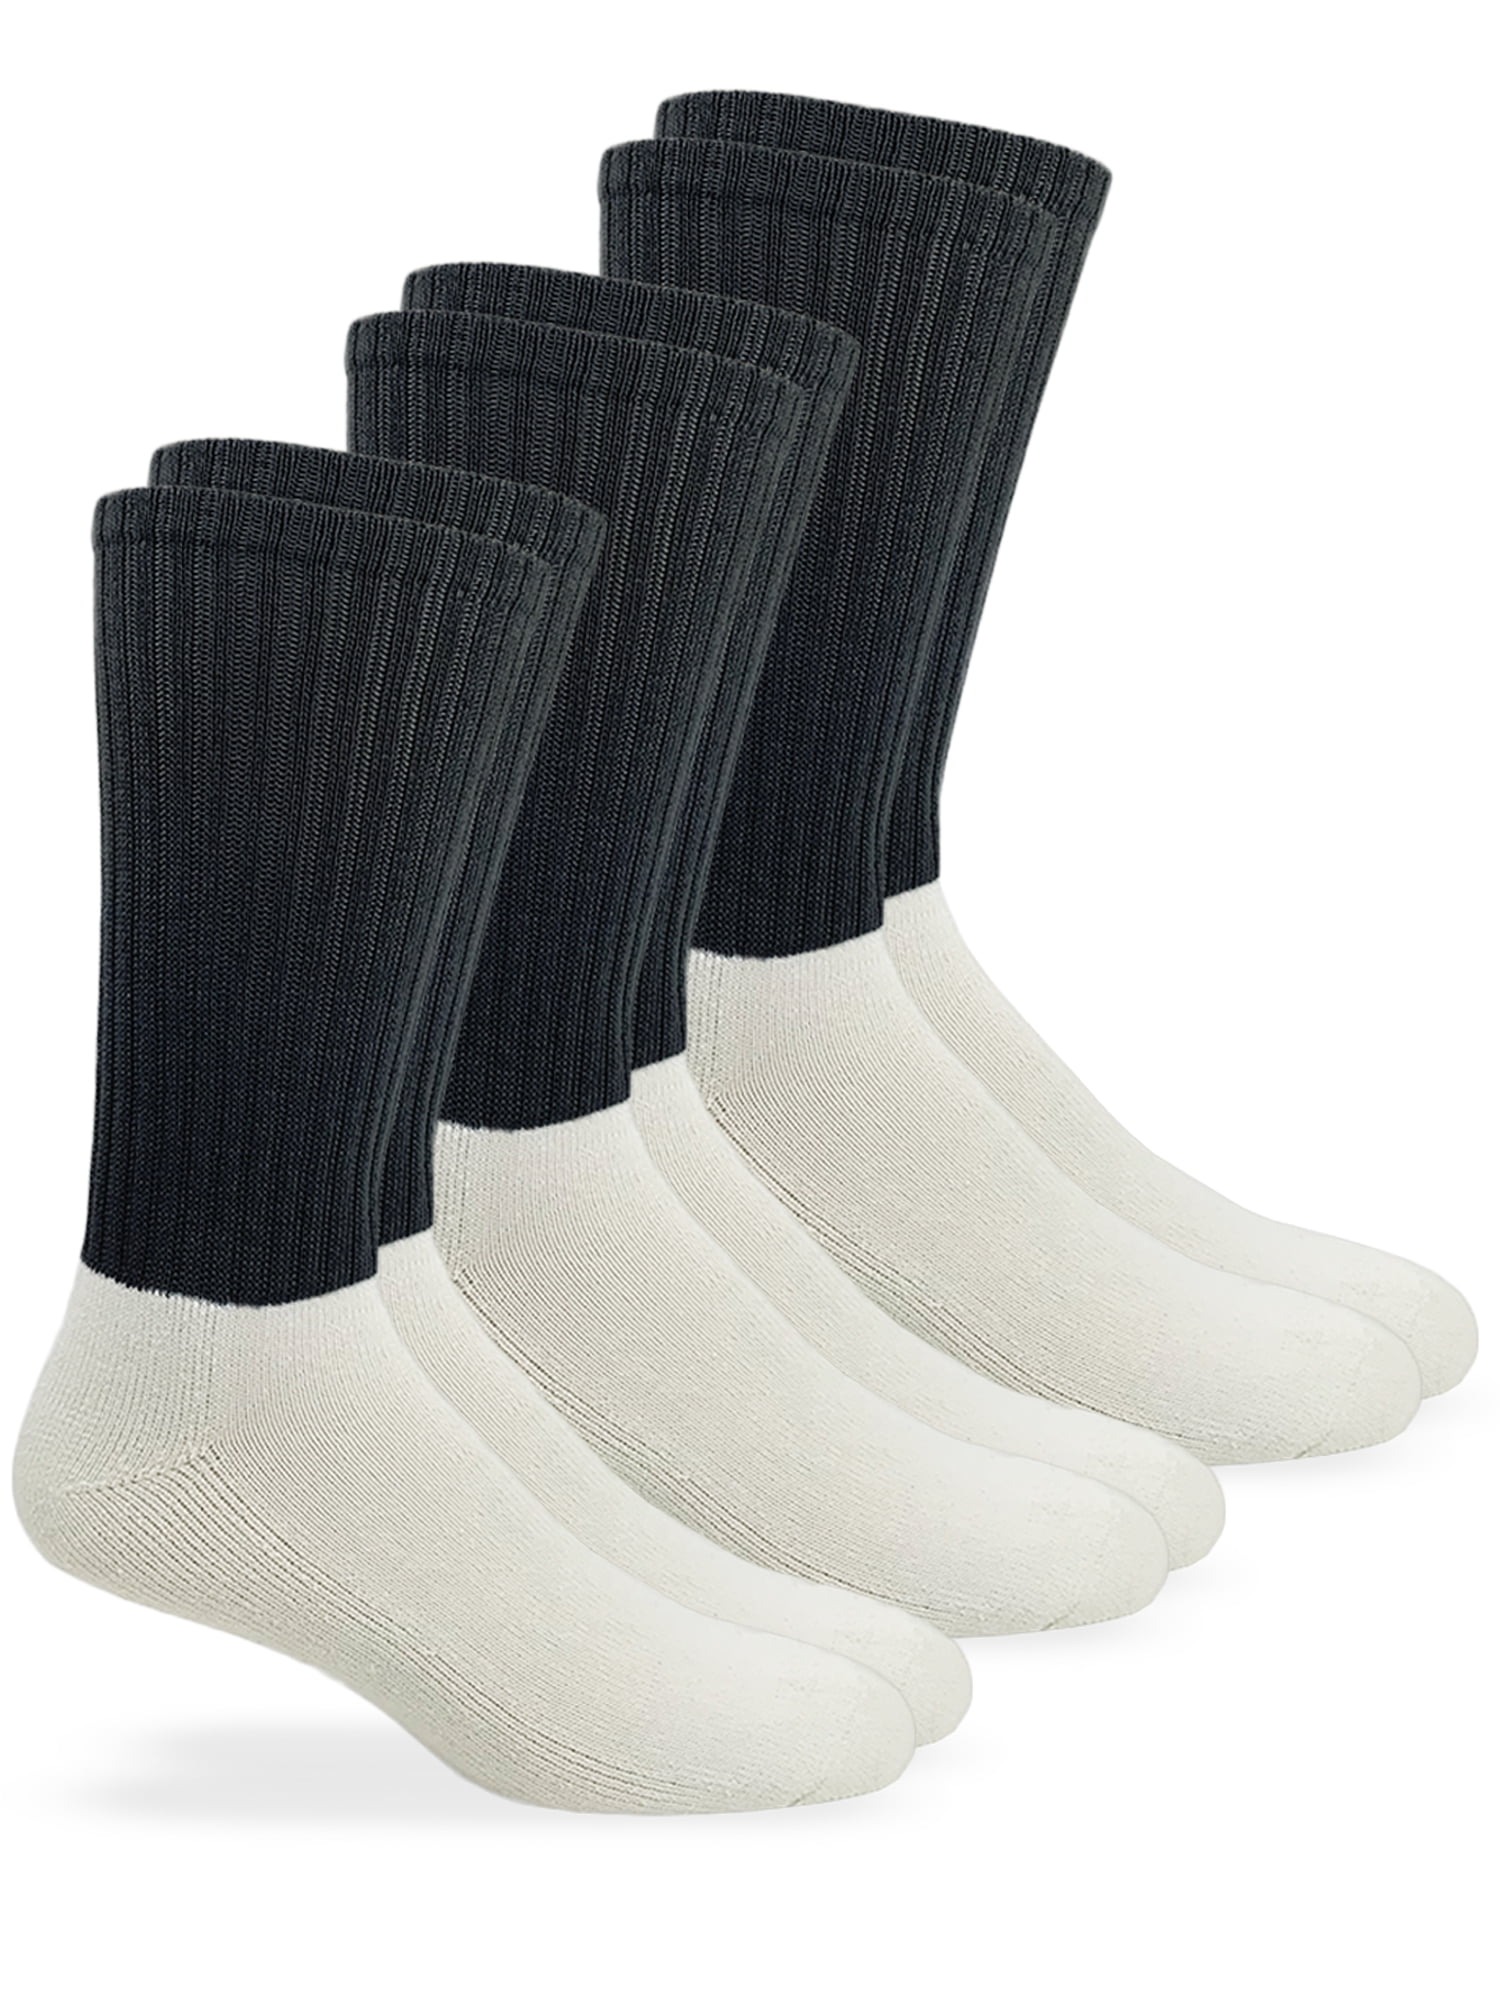 3 Pack Mens Cushioned Basketball Socks - Athletic Crew Sport Socks by LISH 9-13